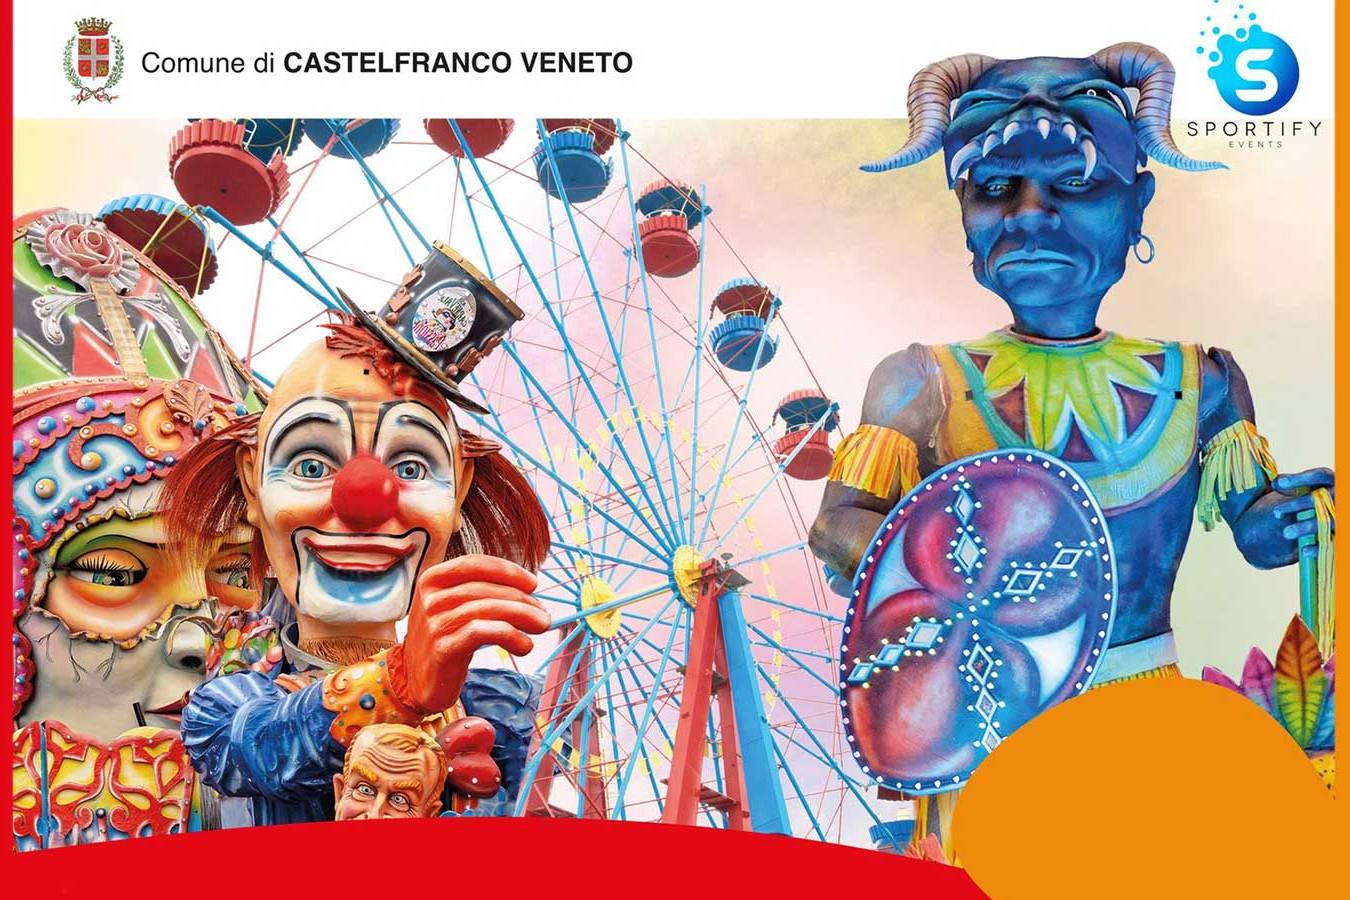 Carnevale a Castelfranco Veneto - sfilata serale dei carri allegorici